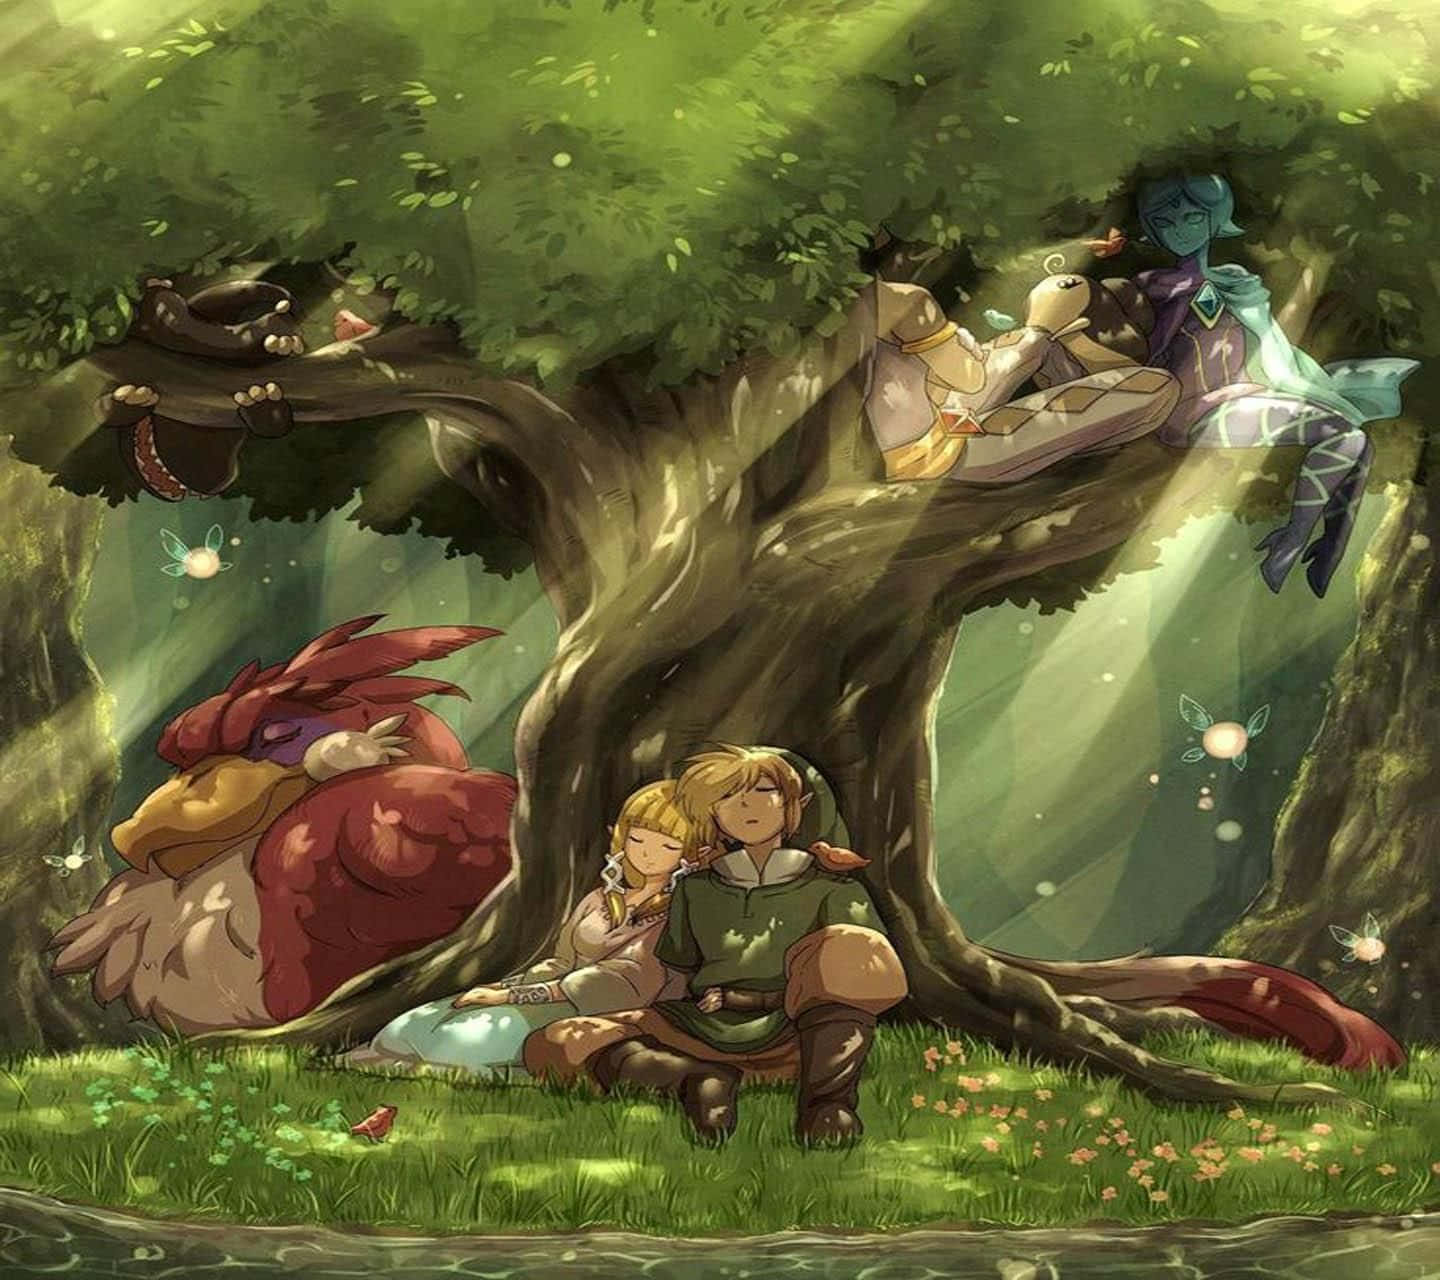 Link soars through the skies on his Loftwing in The Legend of Zelda: Skyward Sword Wallpaper